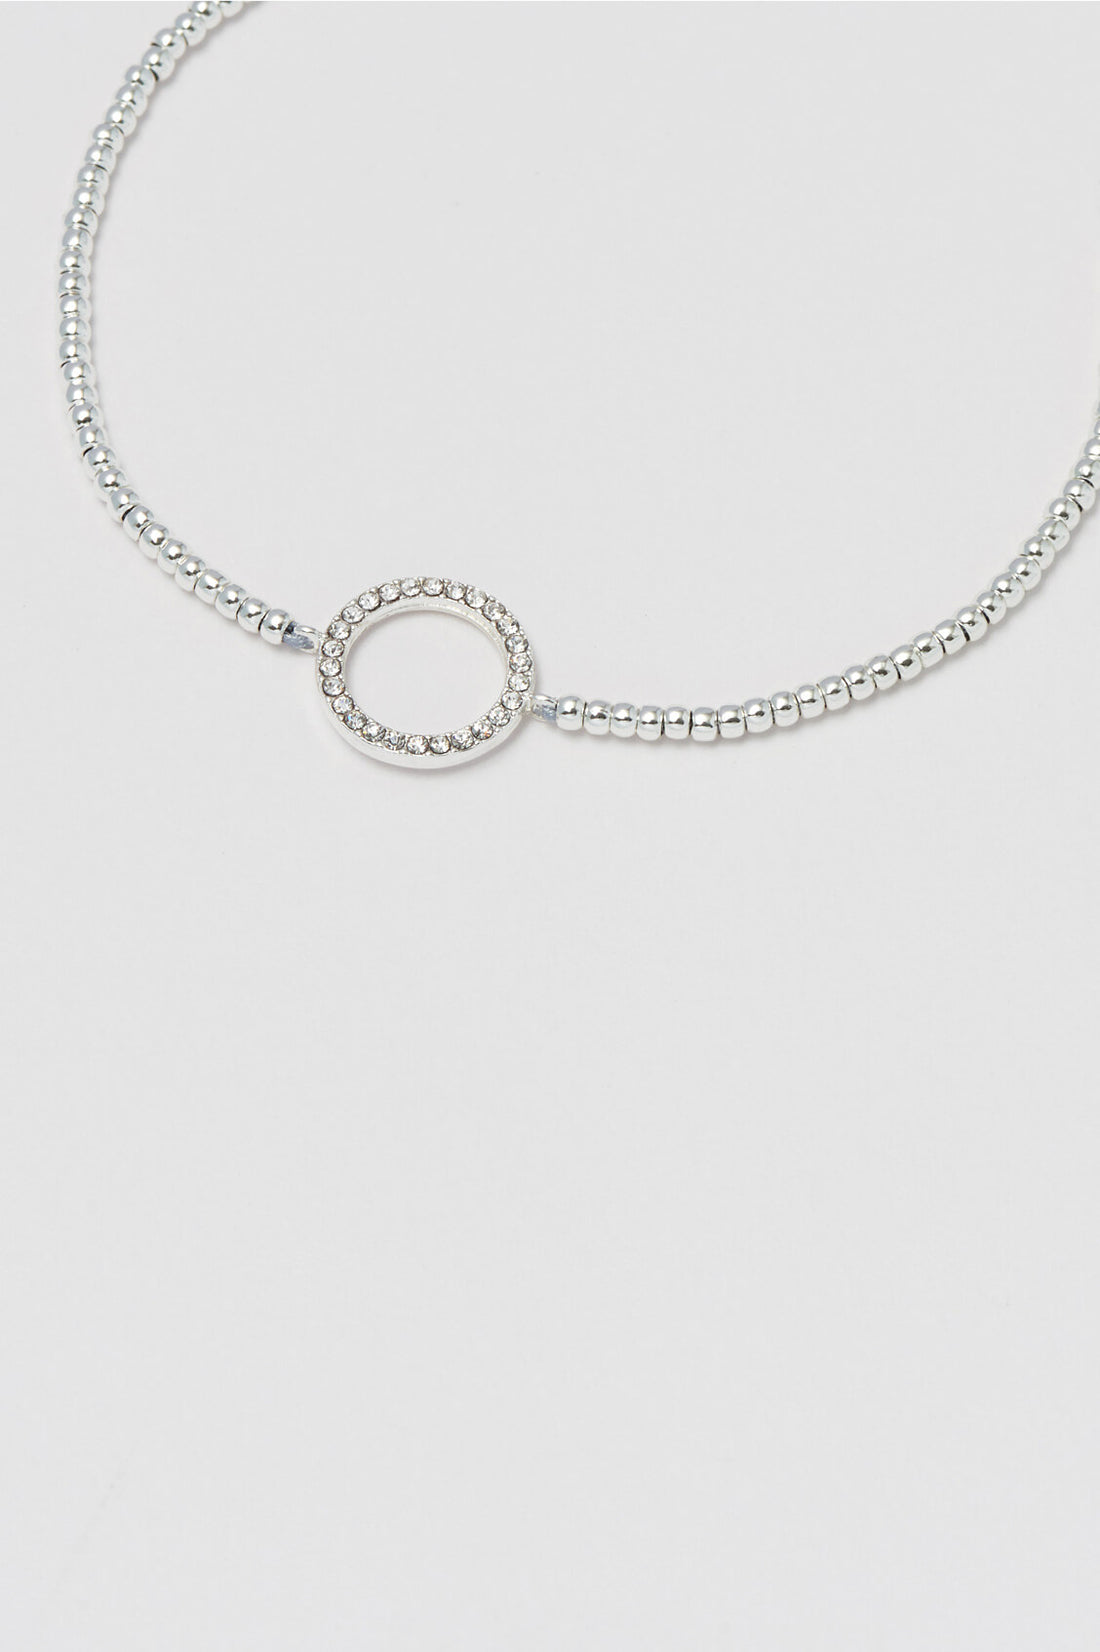 Louise CZ Circle Bracelet - Silver Plated